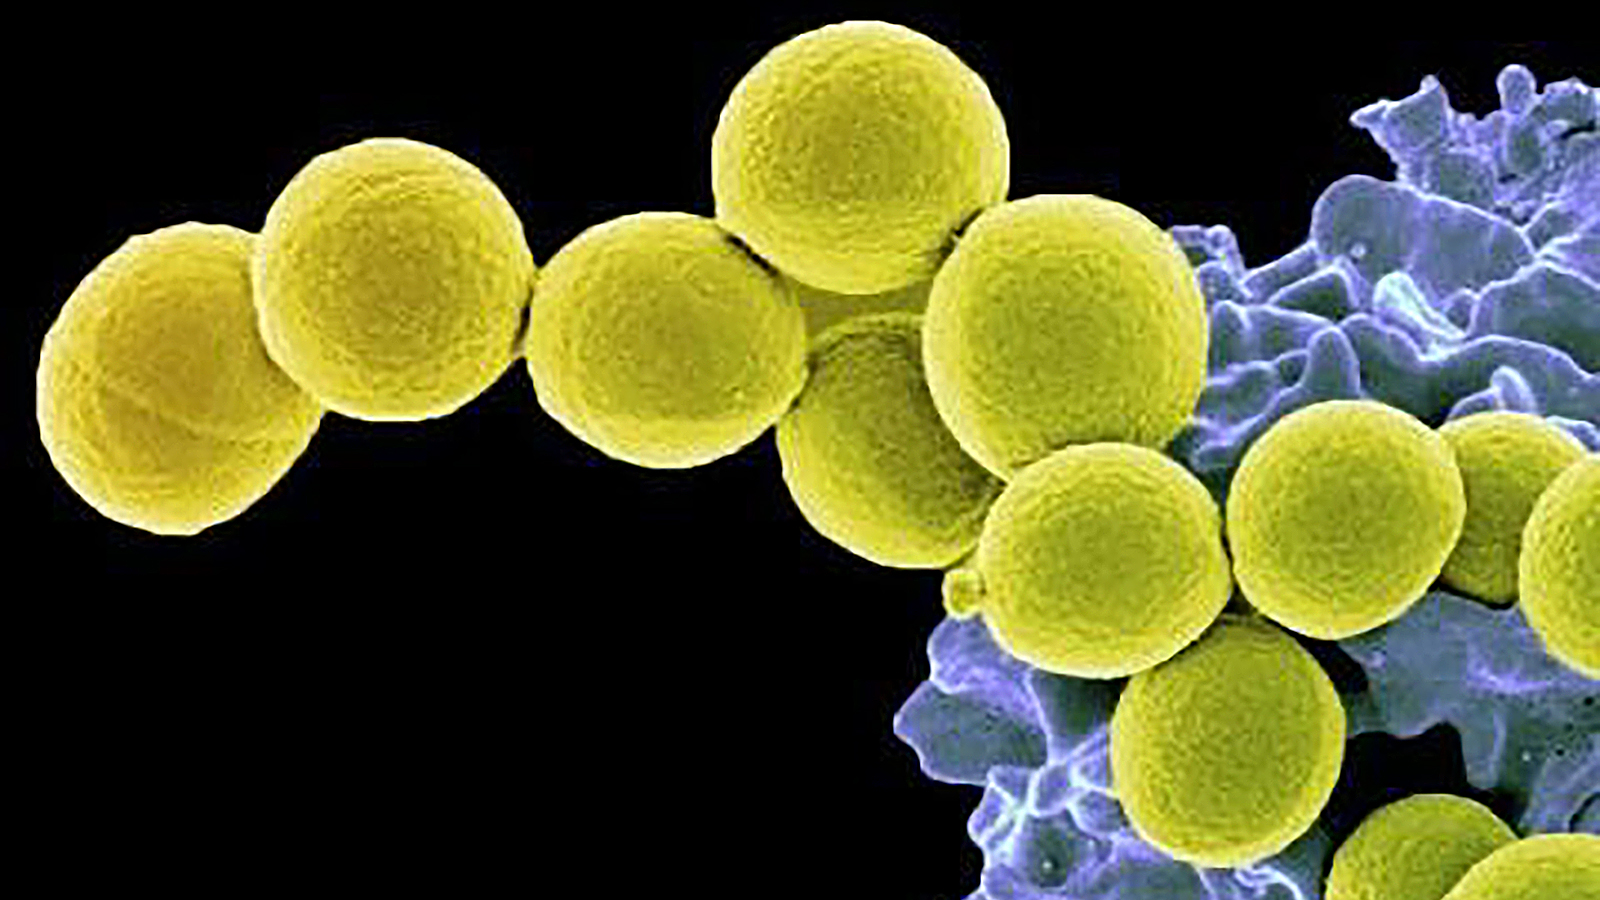 Staphylococcus aureus 4. Стафилококк золотистый Staphylococcus aureus. Сапрофитный стафилококк. Золотистый стафилококк CA-MRSA что это. Пневмококк золотистый стафилококк.